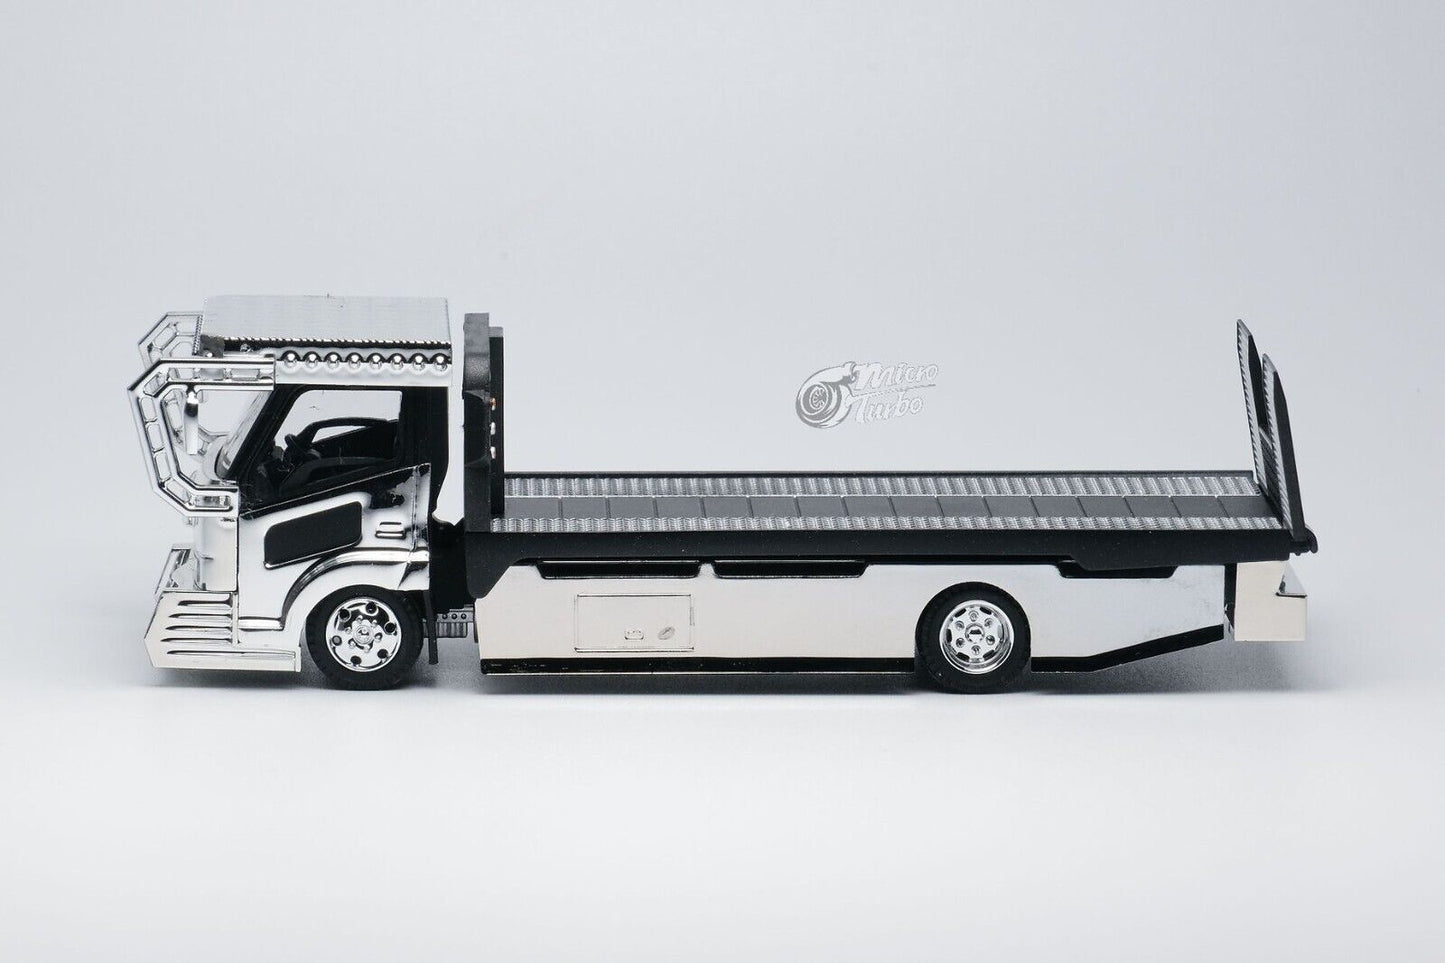 Micro Turbo Dekotora Transporter Truck Silver Chrome 1:64